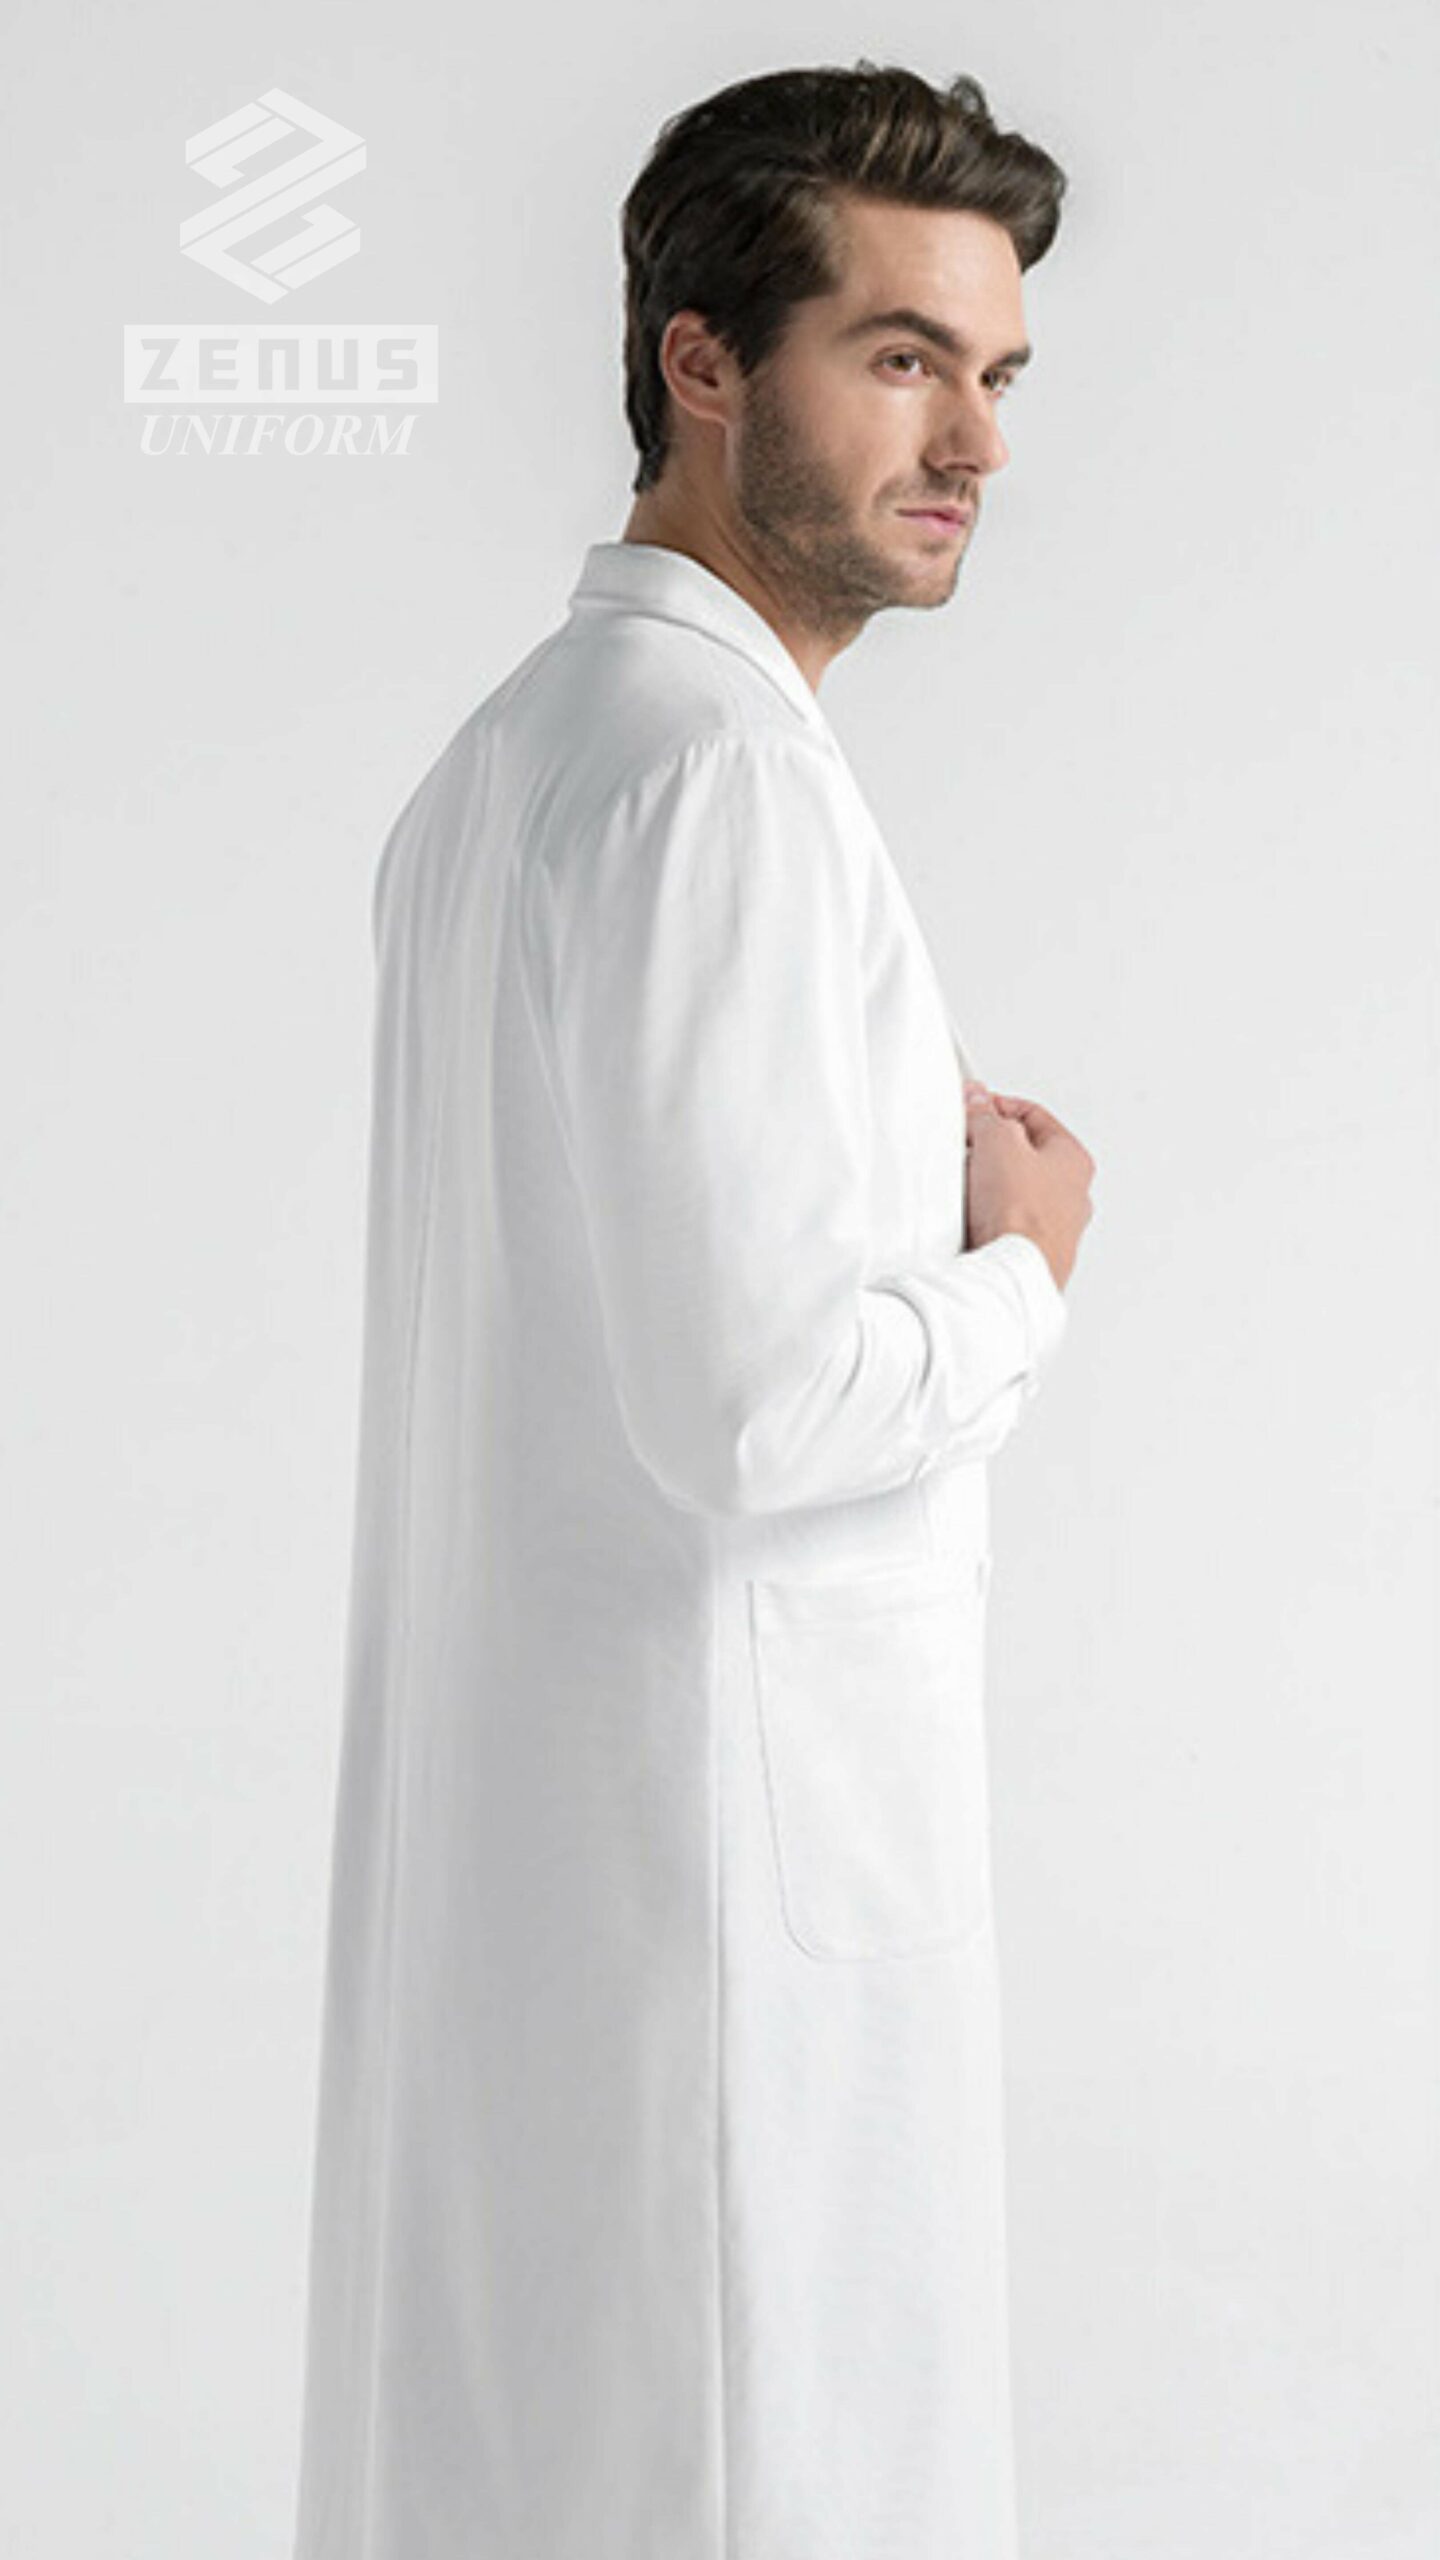 實驗室袍, 實驗袍, Lab Coat -pic02